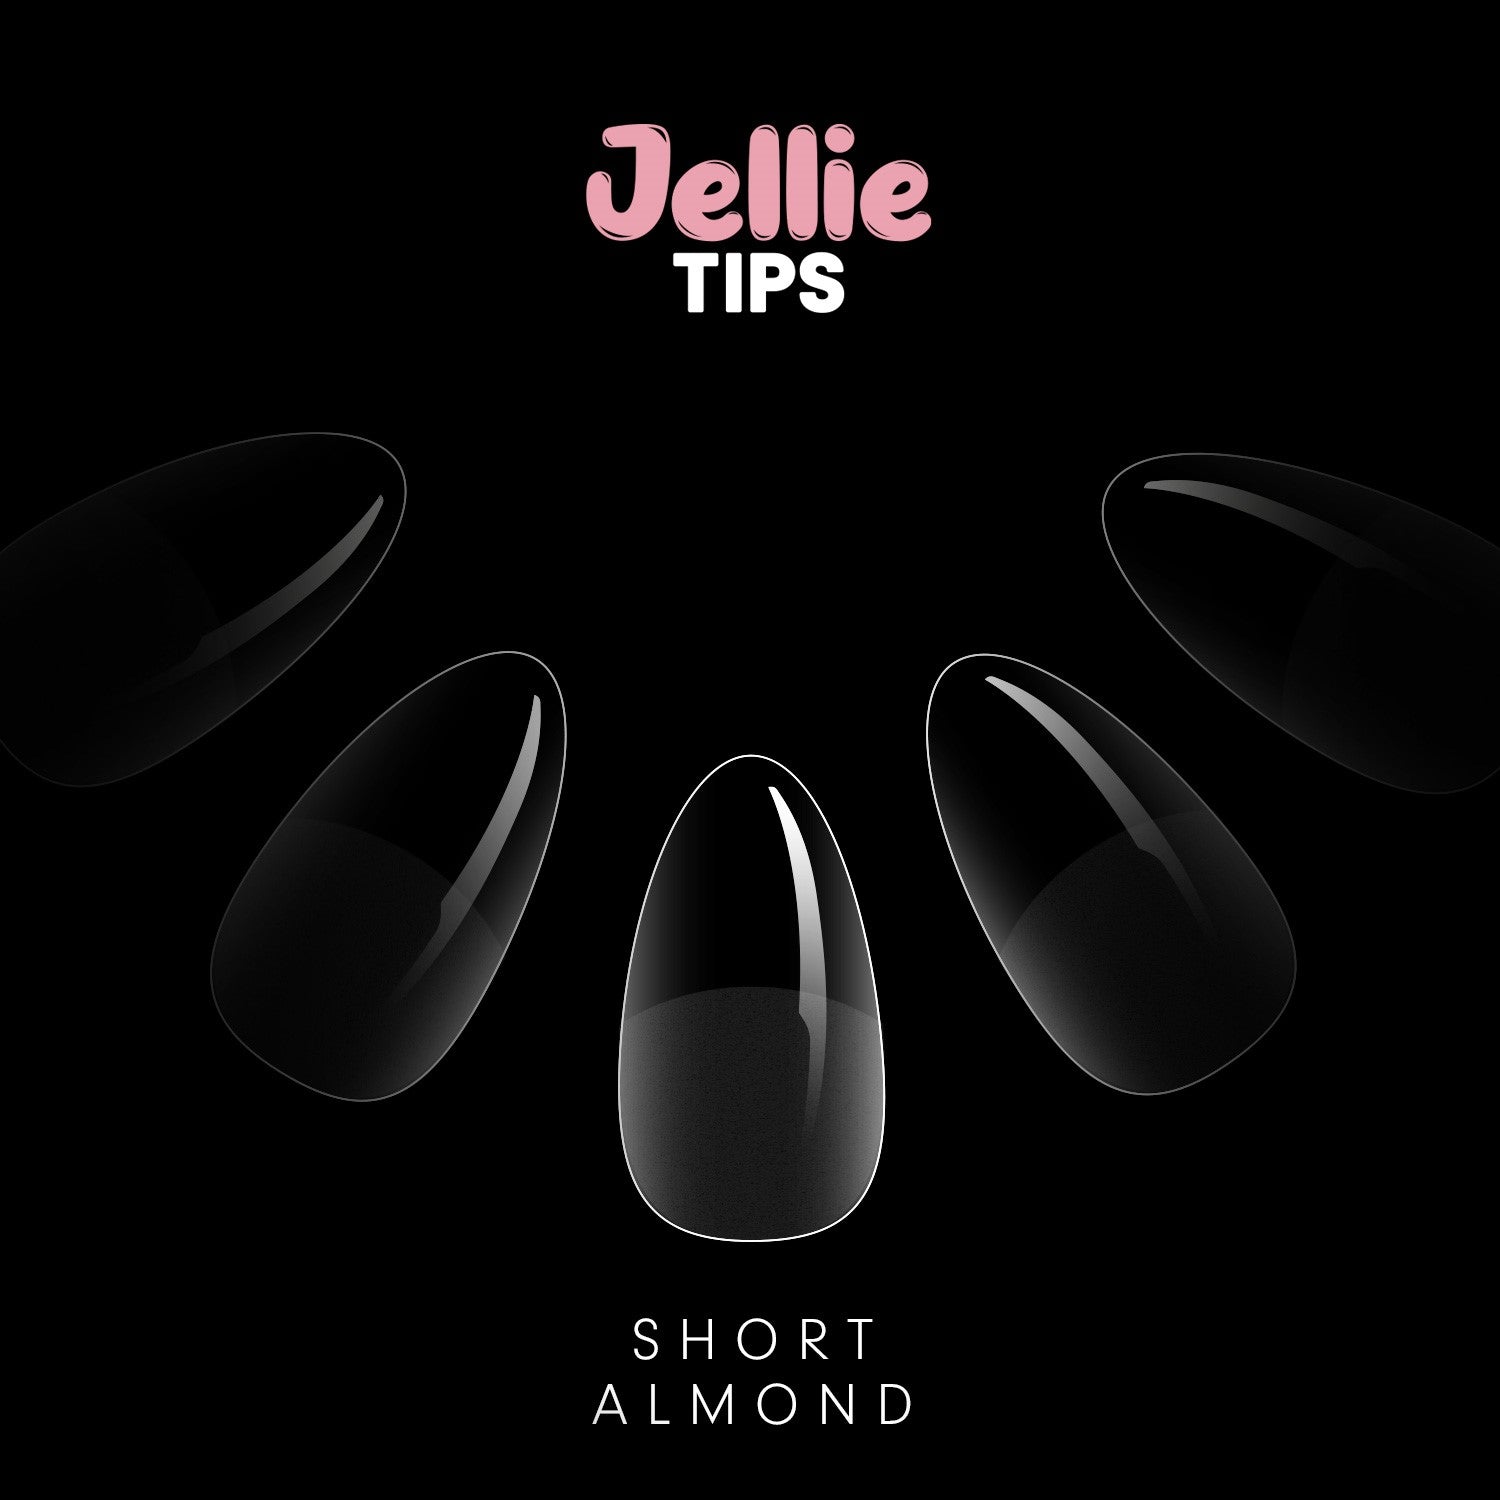 Halo Jellie Nail Tips Short Almond, Sizes 0-11, 120 Mixed Sizes